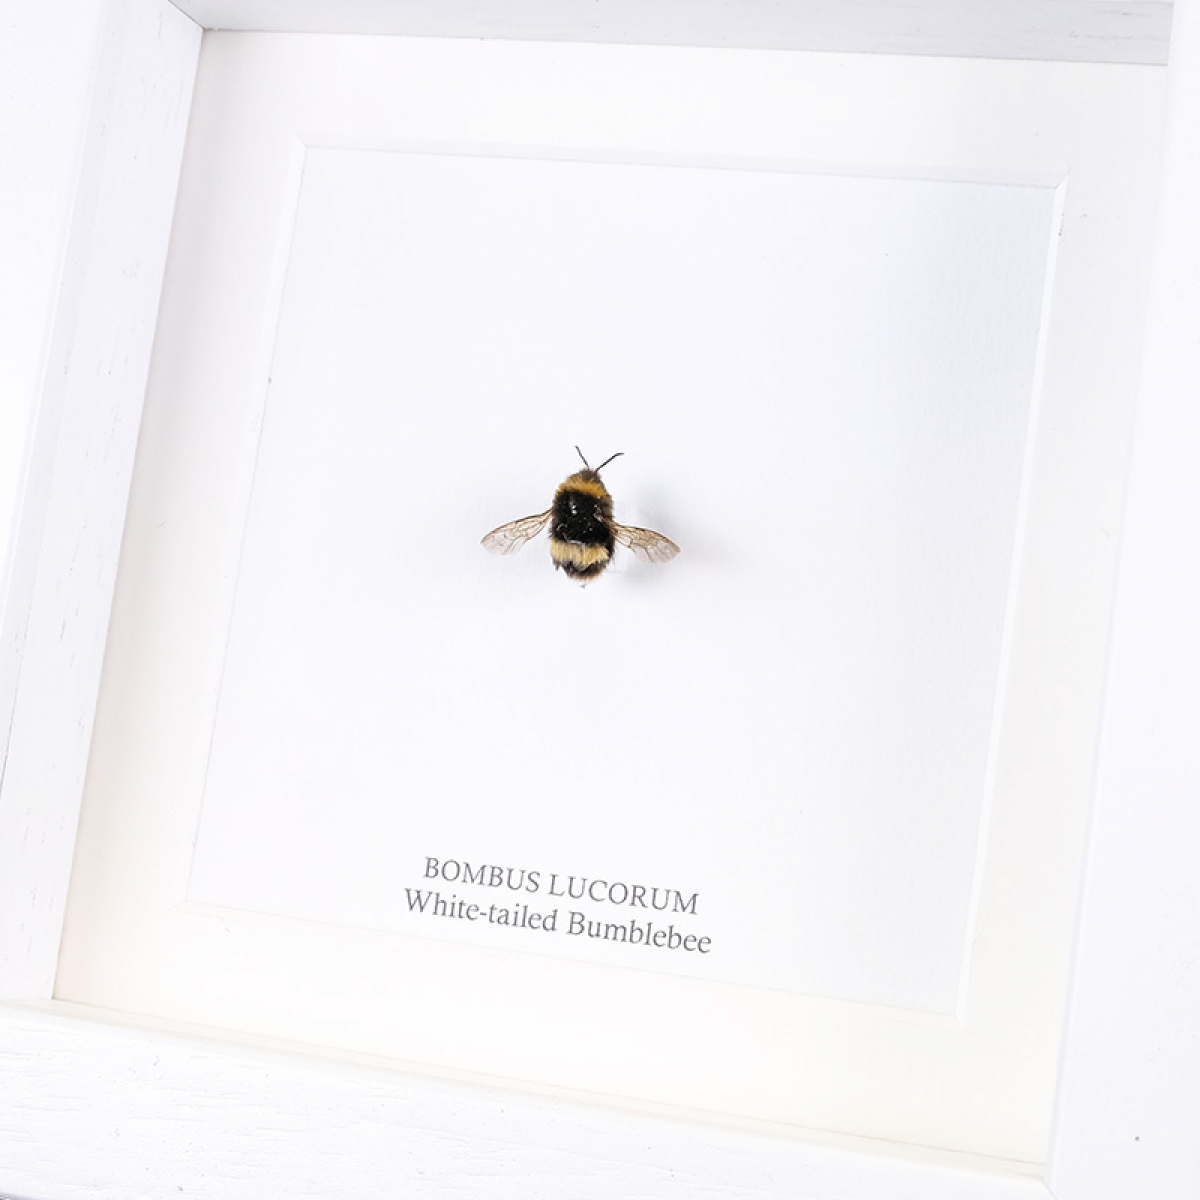 White-tailed Bumblebee in Box Frame (Bombus lucorum)